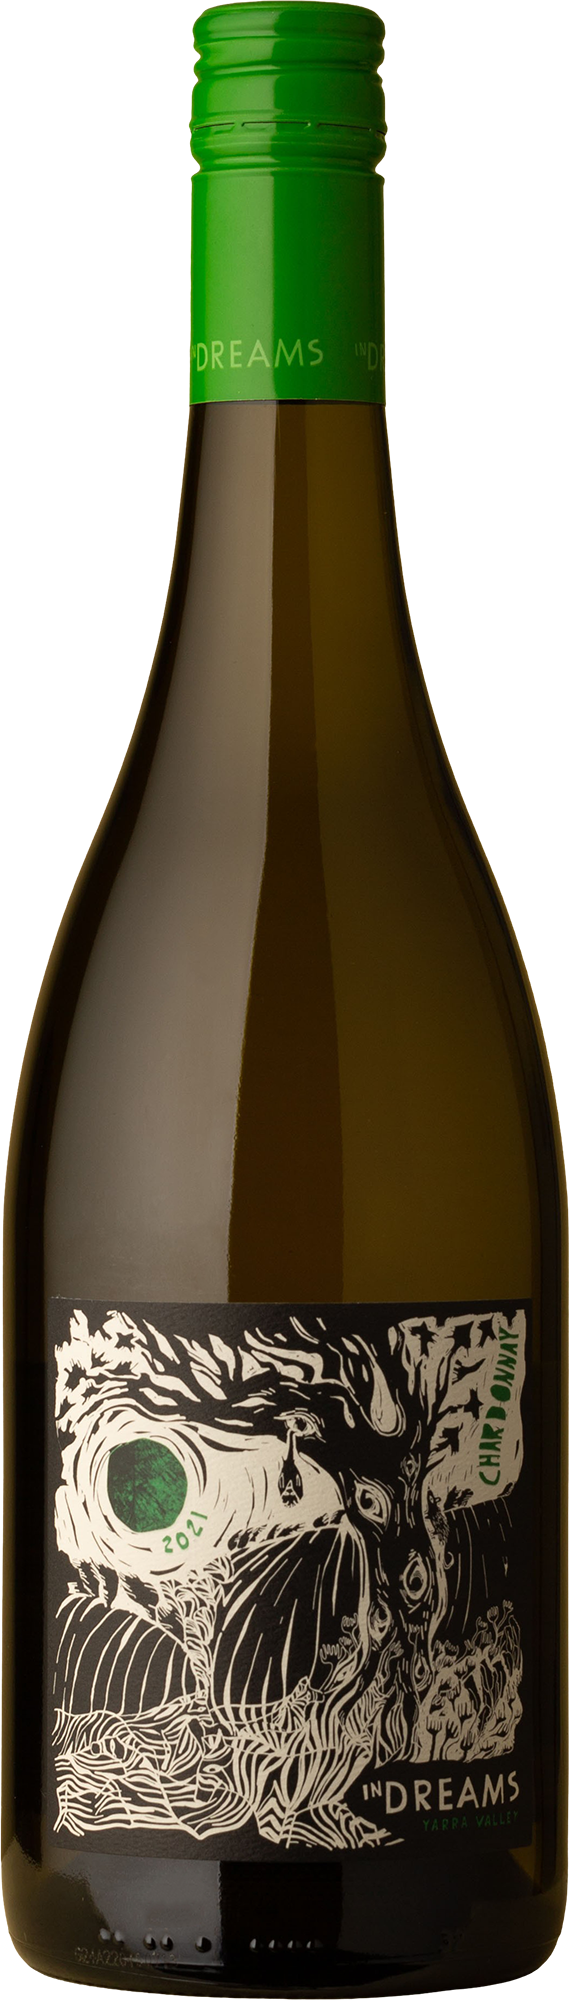 In Dreams - Chardonnay 2021 White Wine